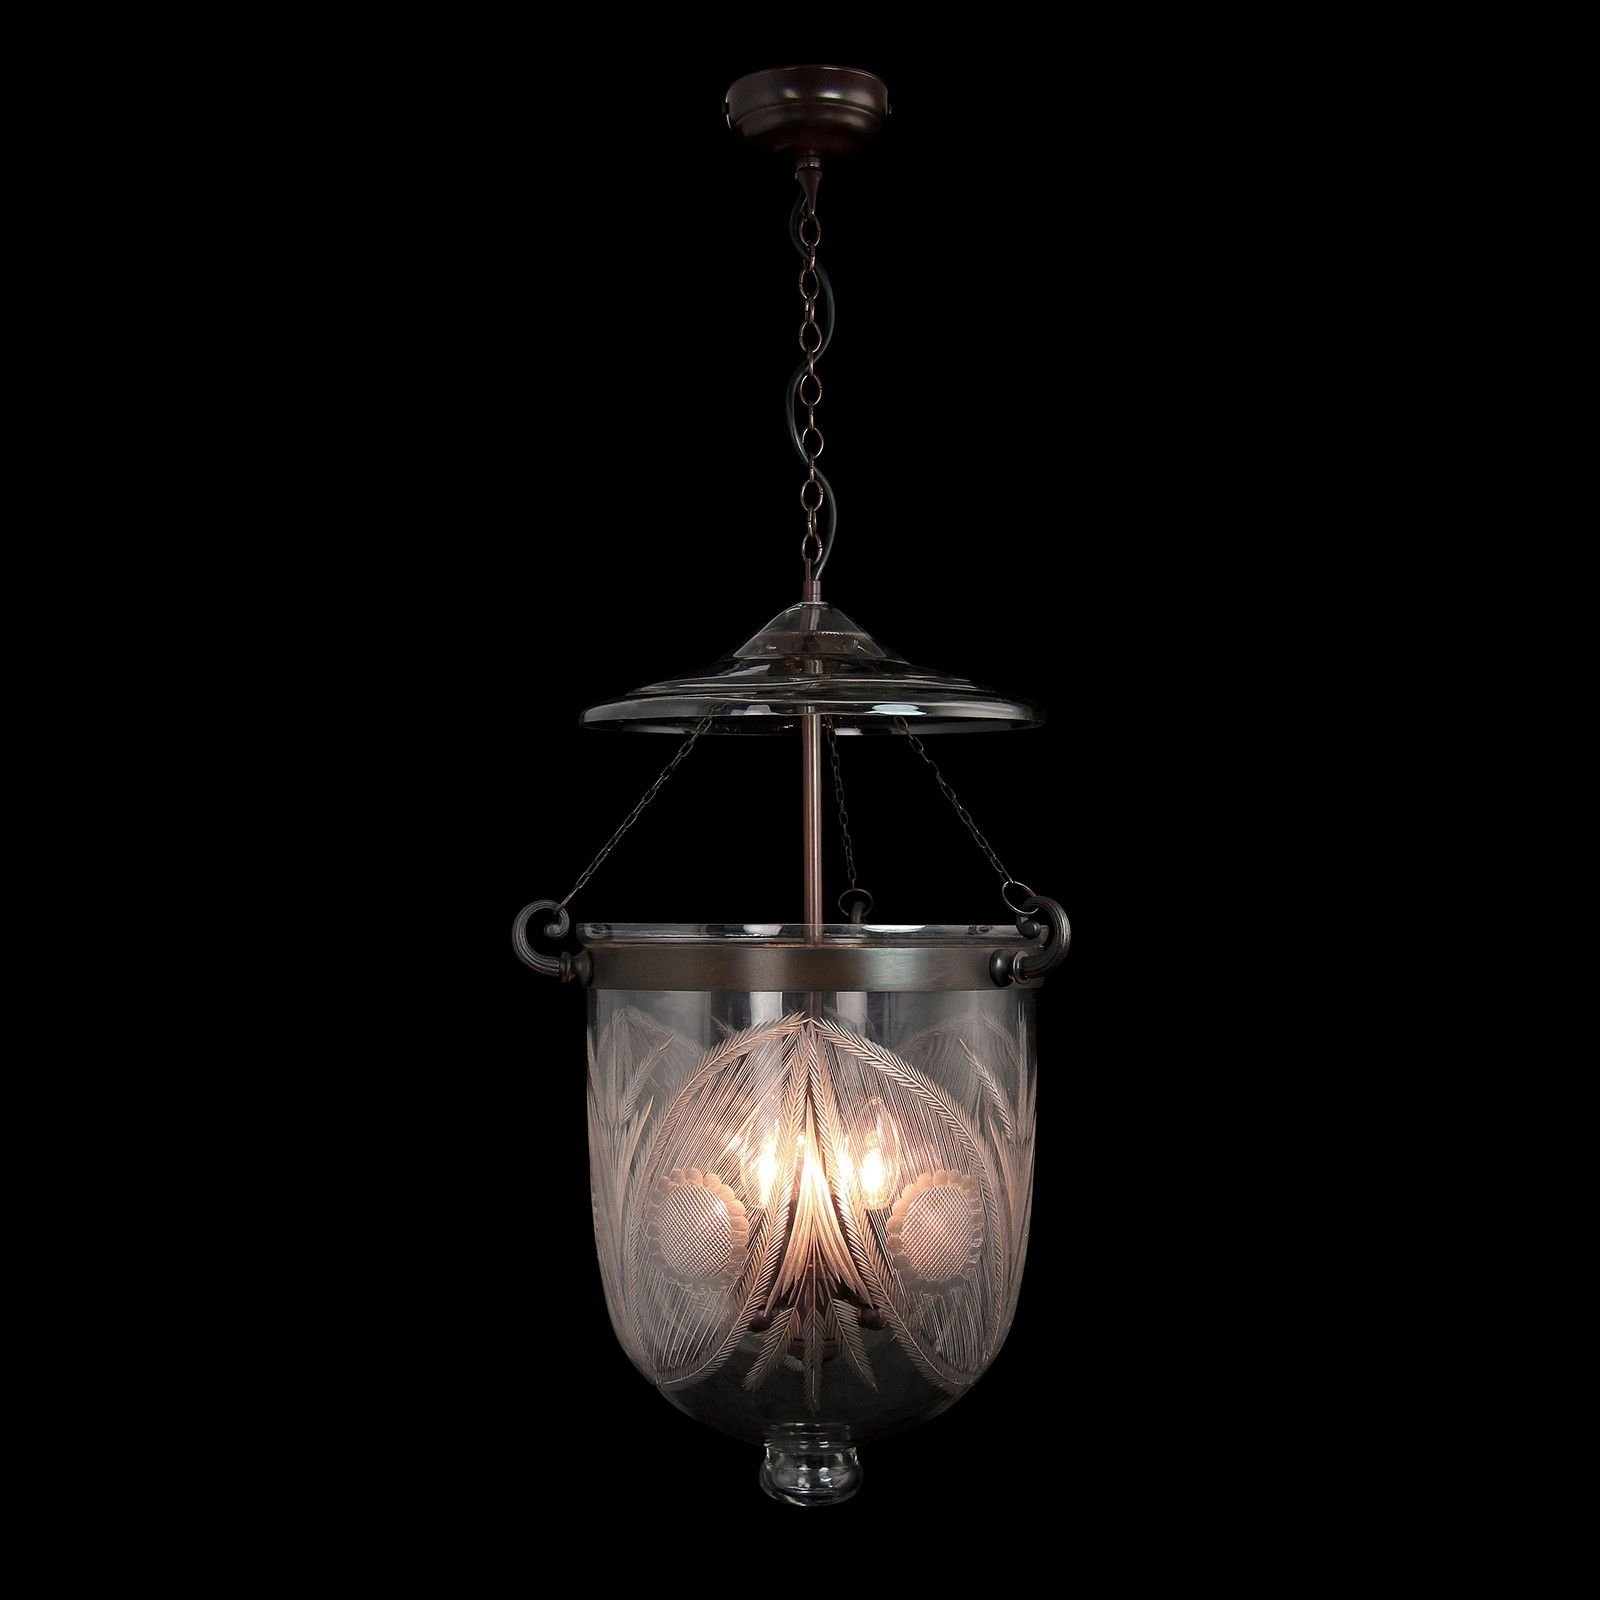 Fern Lantern - Victorian Style Pendant Light - Large in Antique Bronze